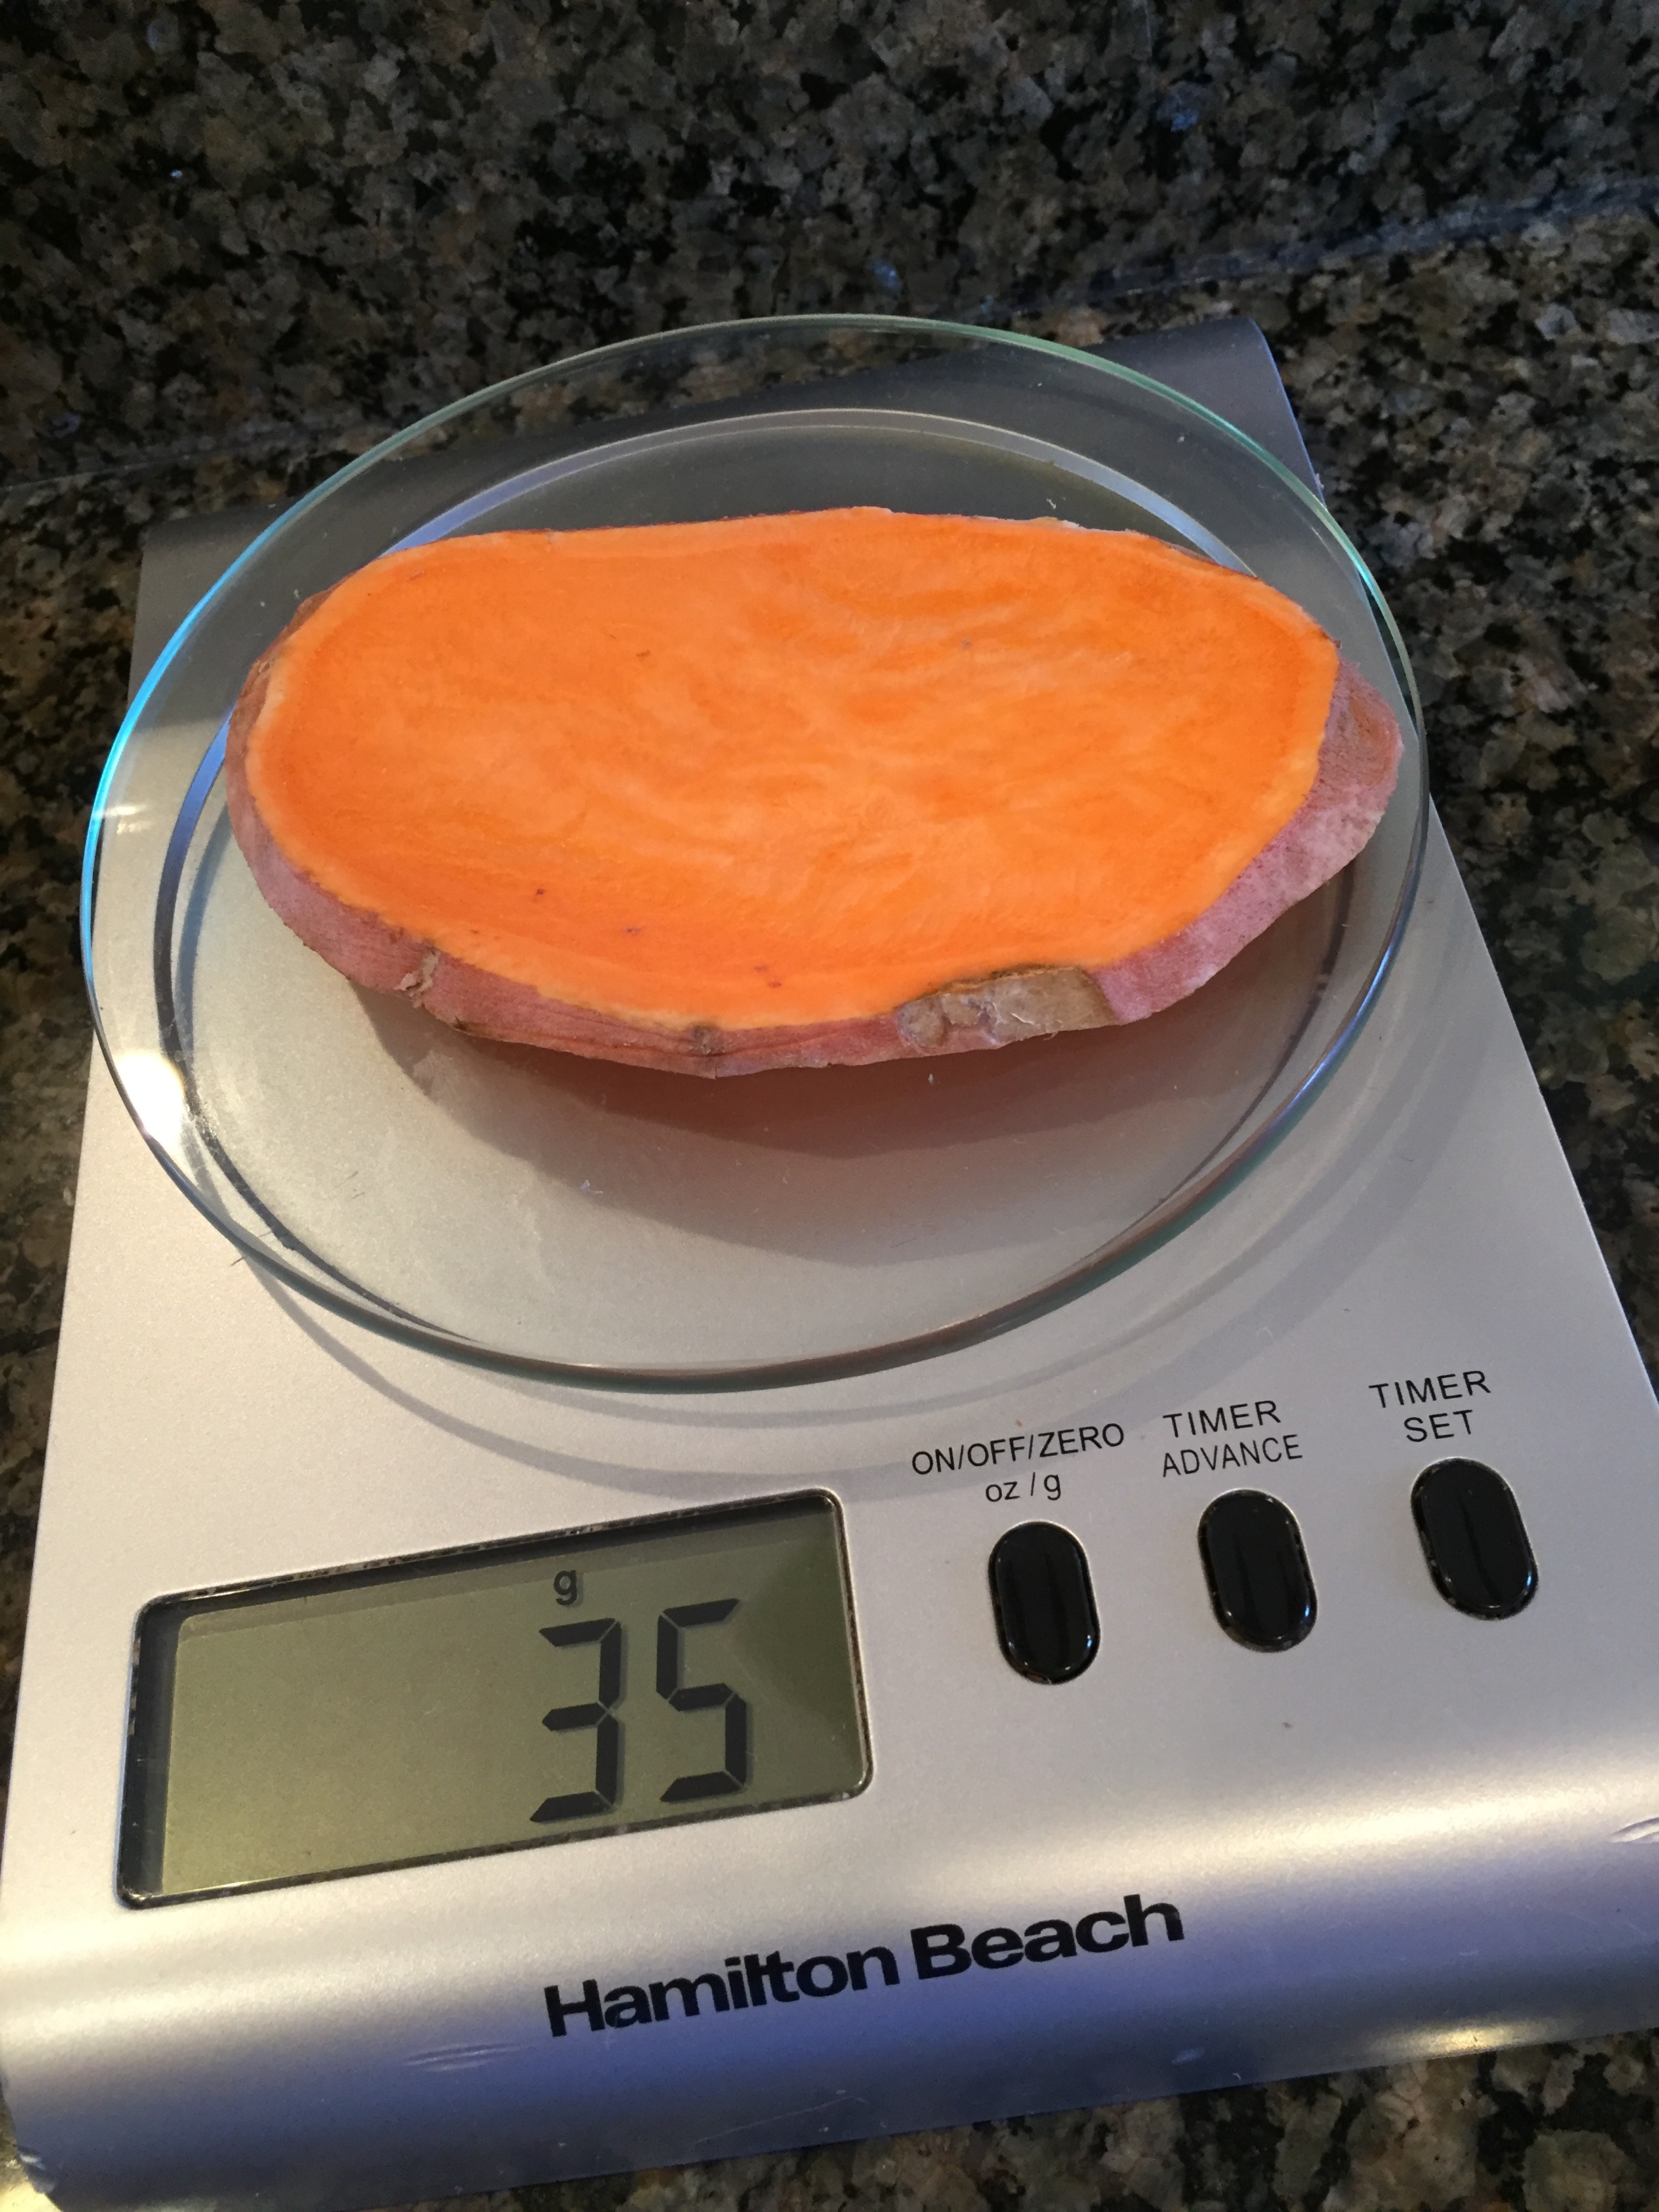 1/4 inch slice - 1.2 ounces or 35 grams